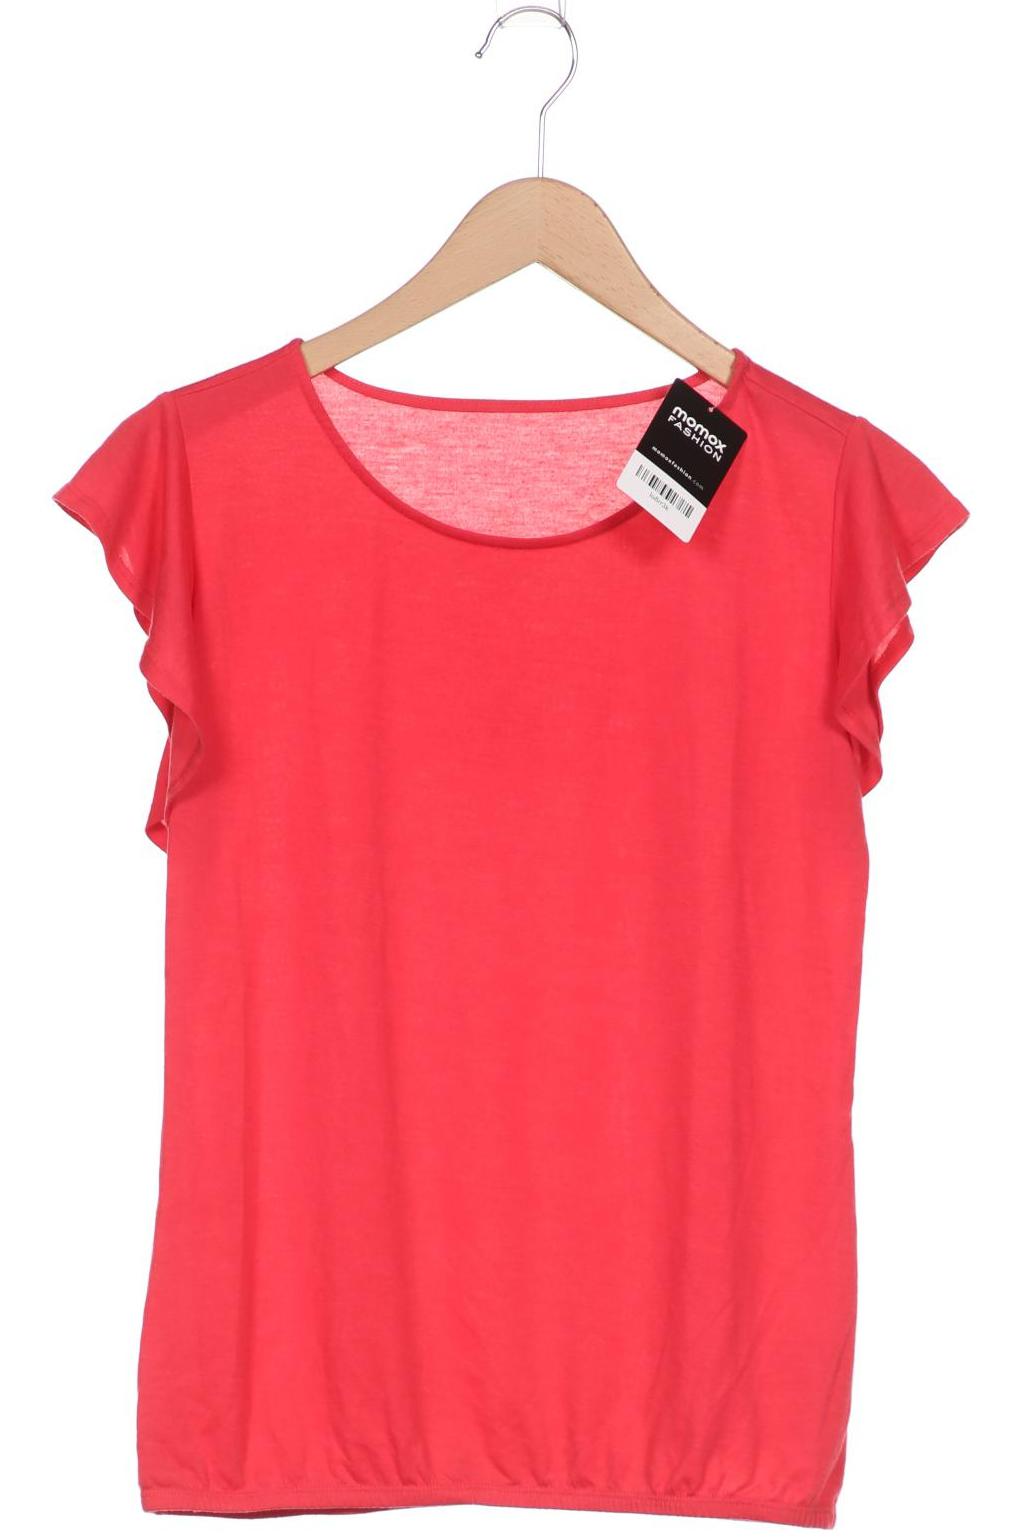 Lascana Damen T-Shirt, rot, Gr. 36 von Lascana